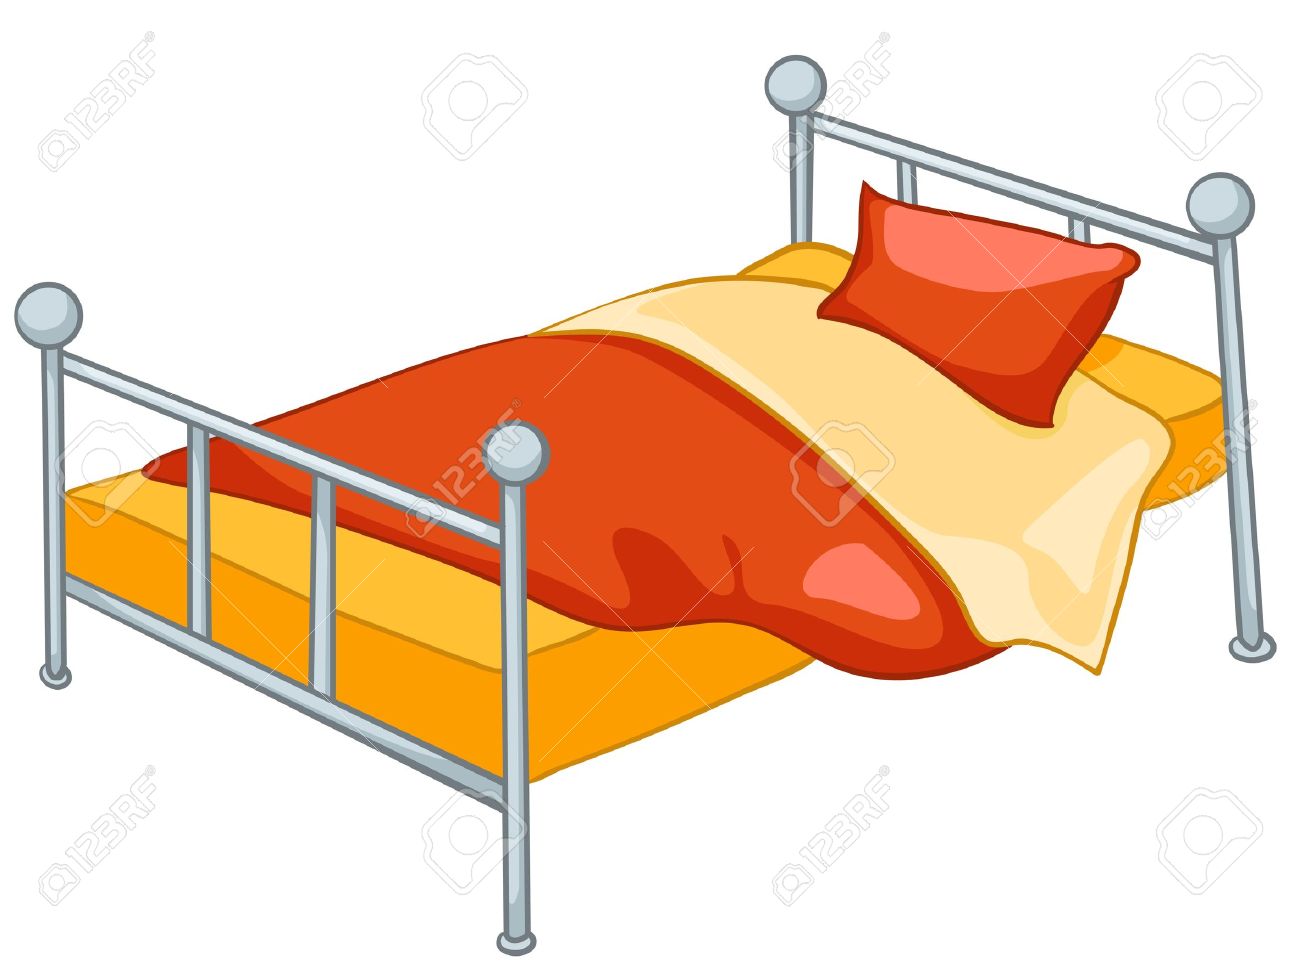 clipart bed cartoon